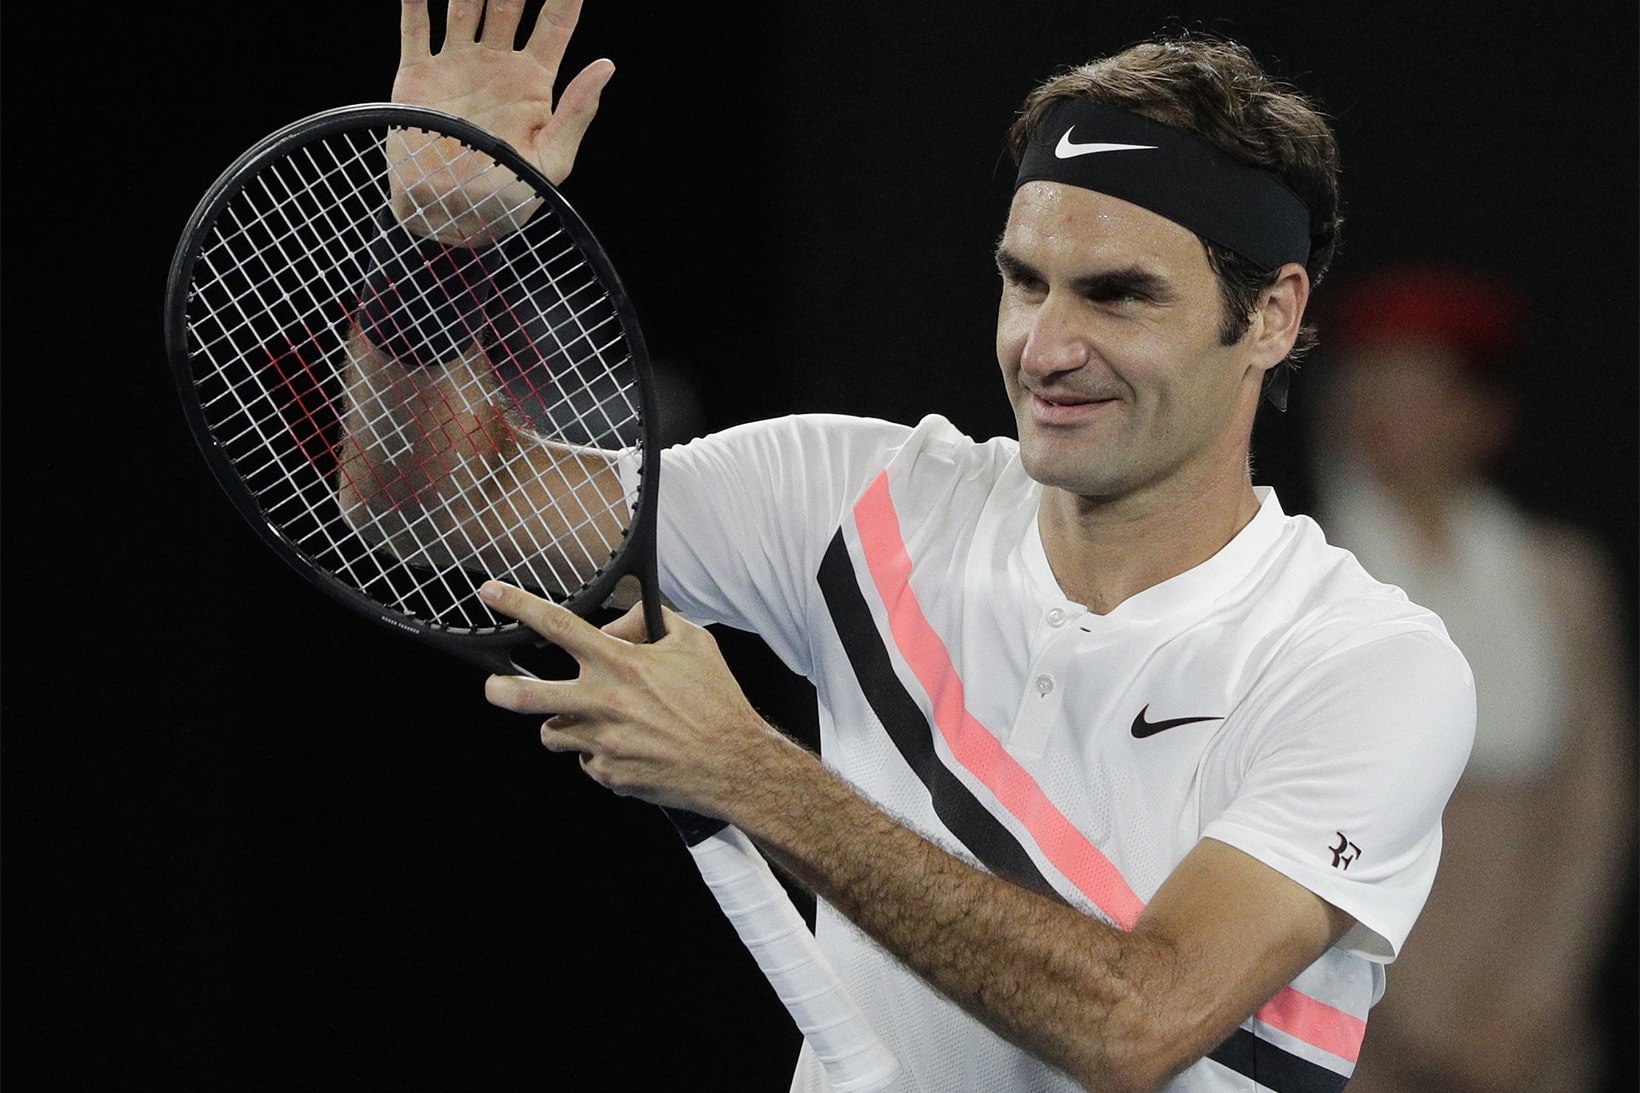 Roger Federer Nike Uniqlo Sponsorship 2020 Olympics Tokyo Novak Djokovic Tennis Sports Deal